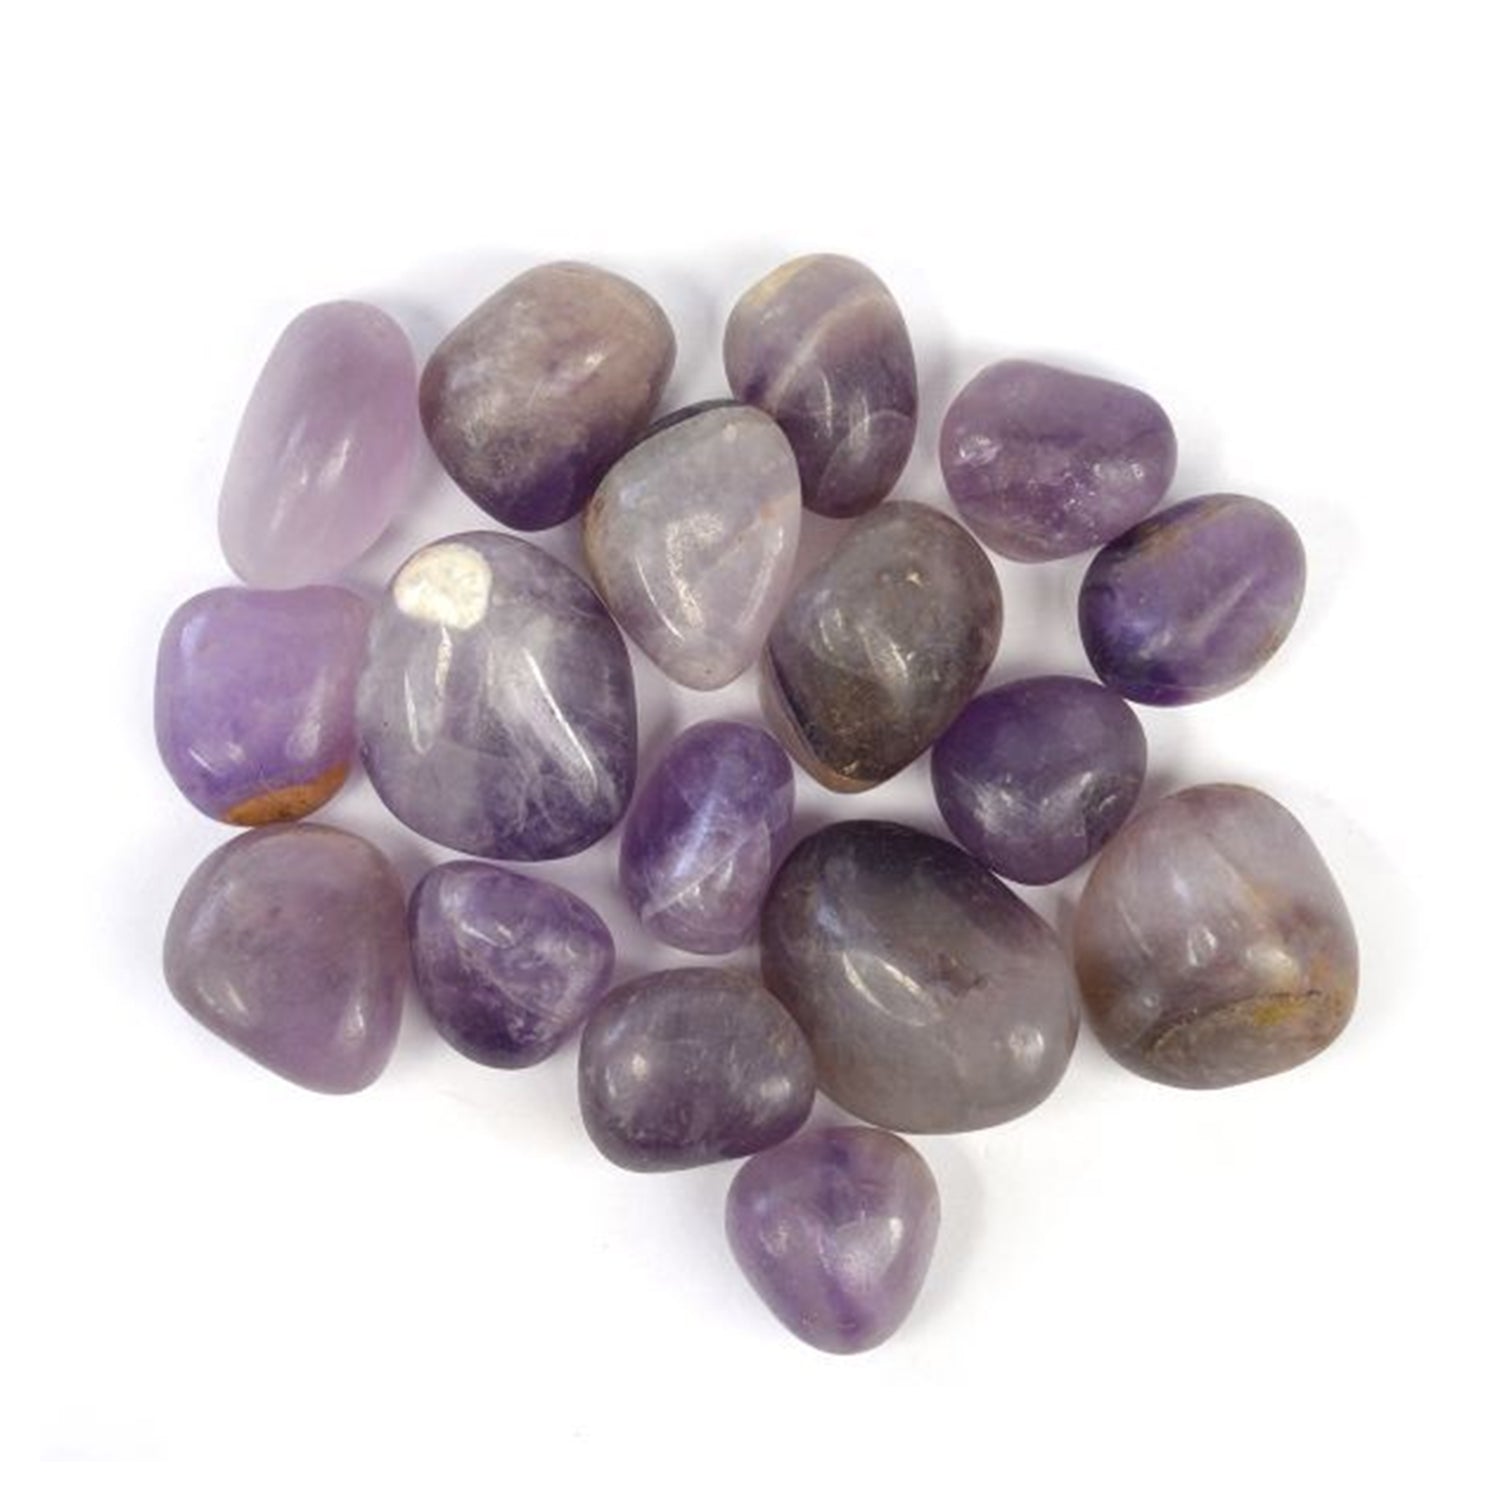 pebble-stone-amethyst